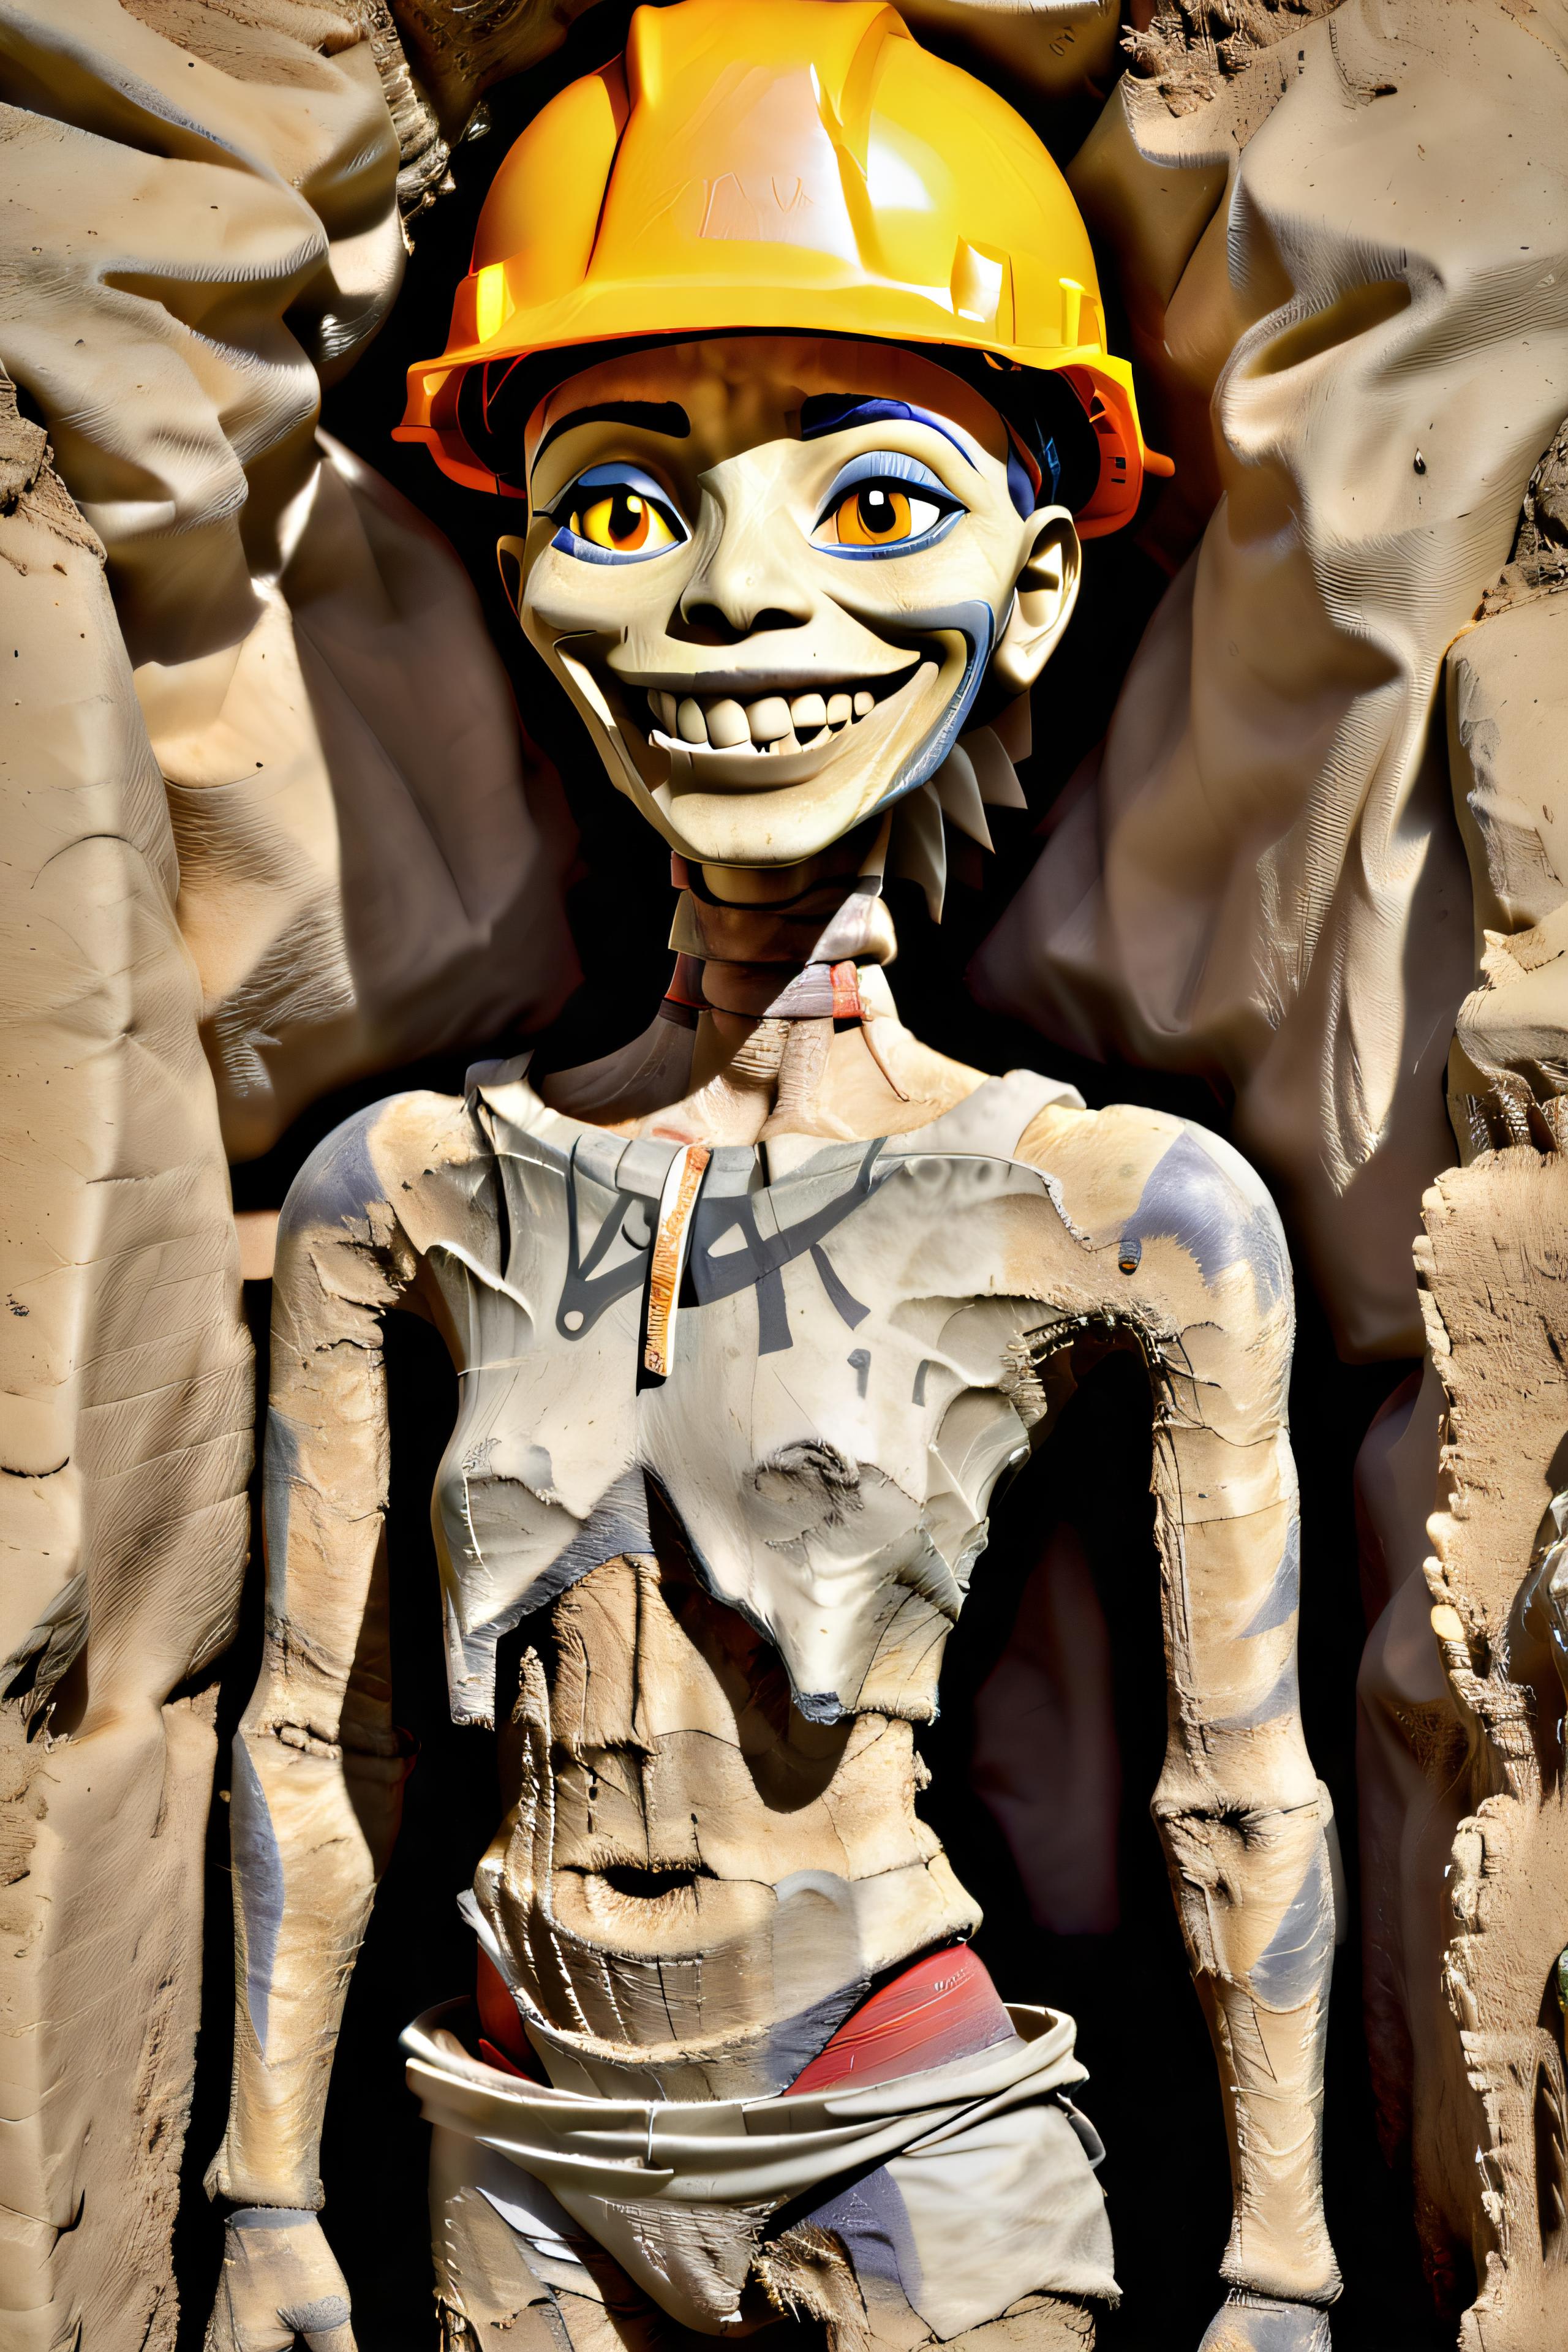 Nazca Mummy image by patricktoba